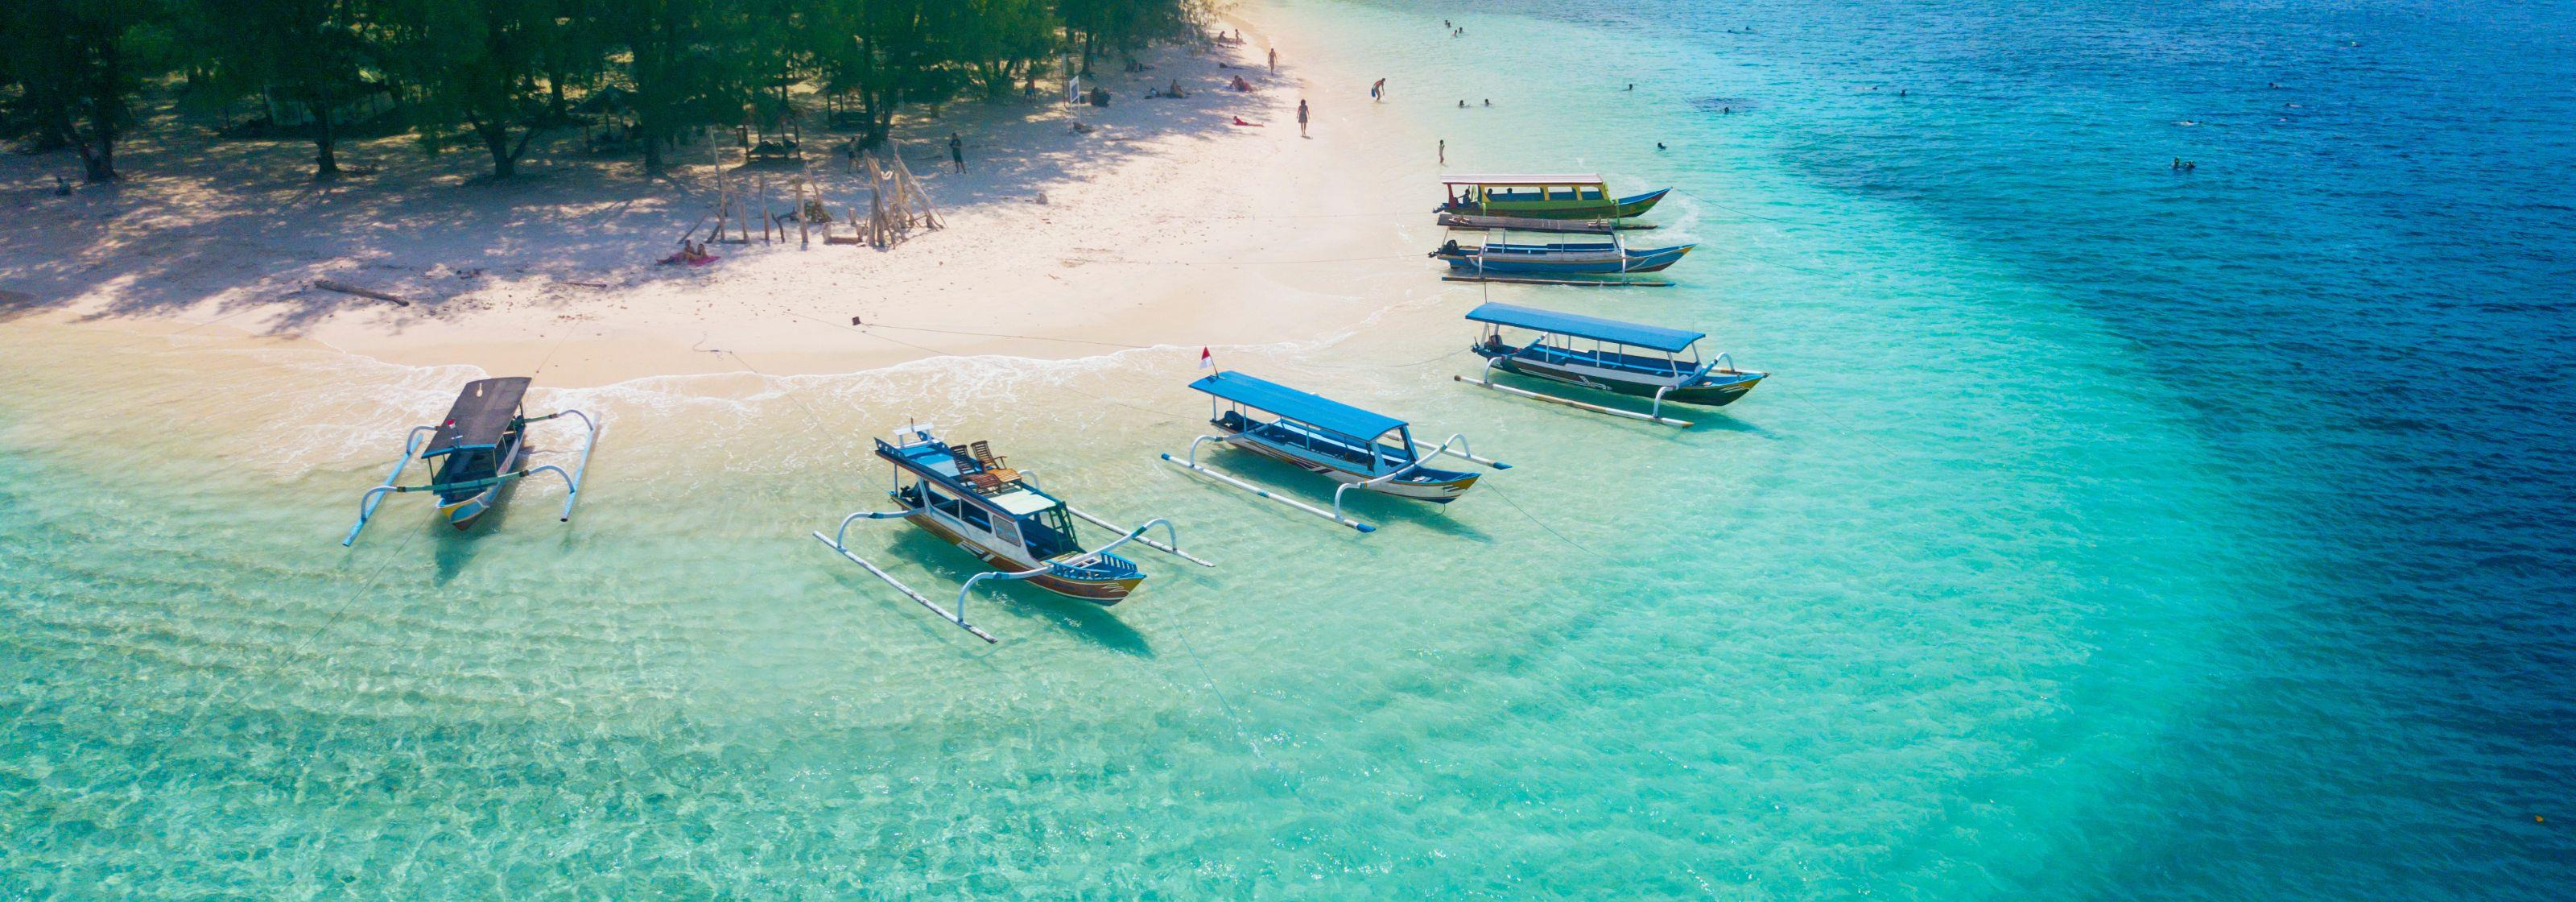 Yuk Explore Serunya, 5 Destinasi Terkini di Lombok yang Wajib DIkunjungi! 